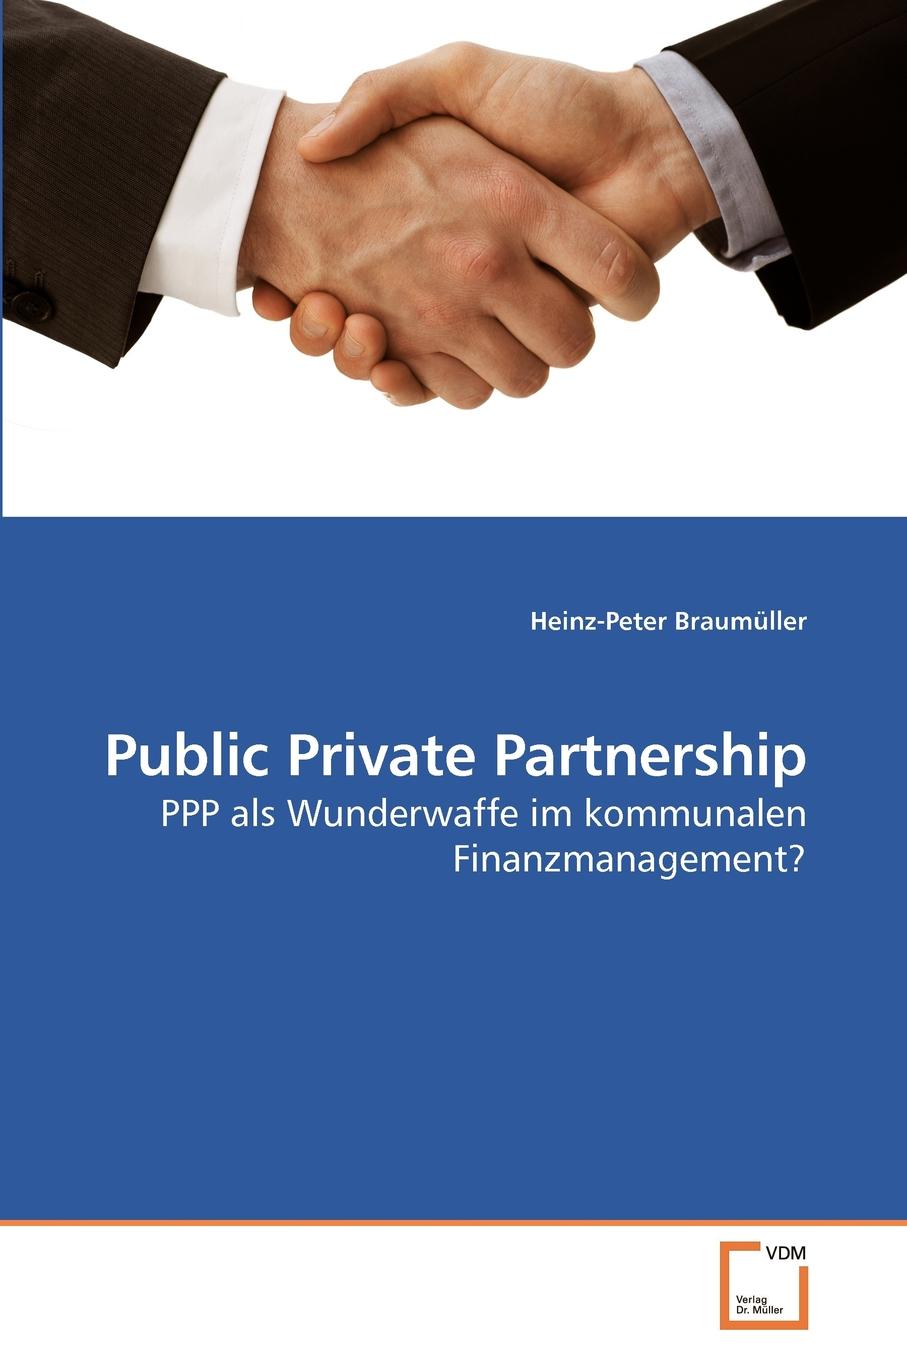 Public private partnerships. PPP partnerships Shvetsiya. Public private partnership